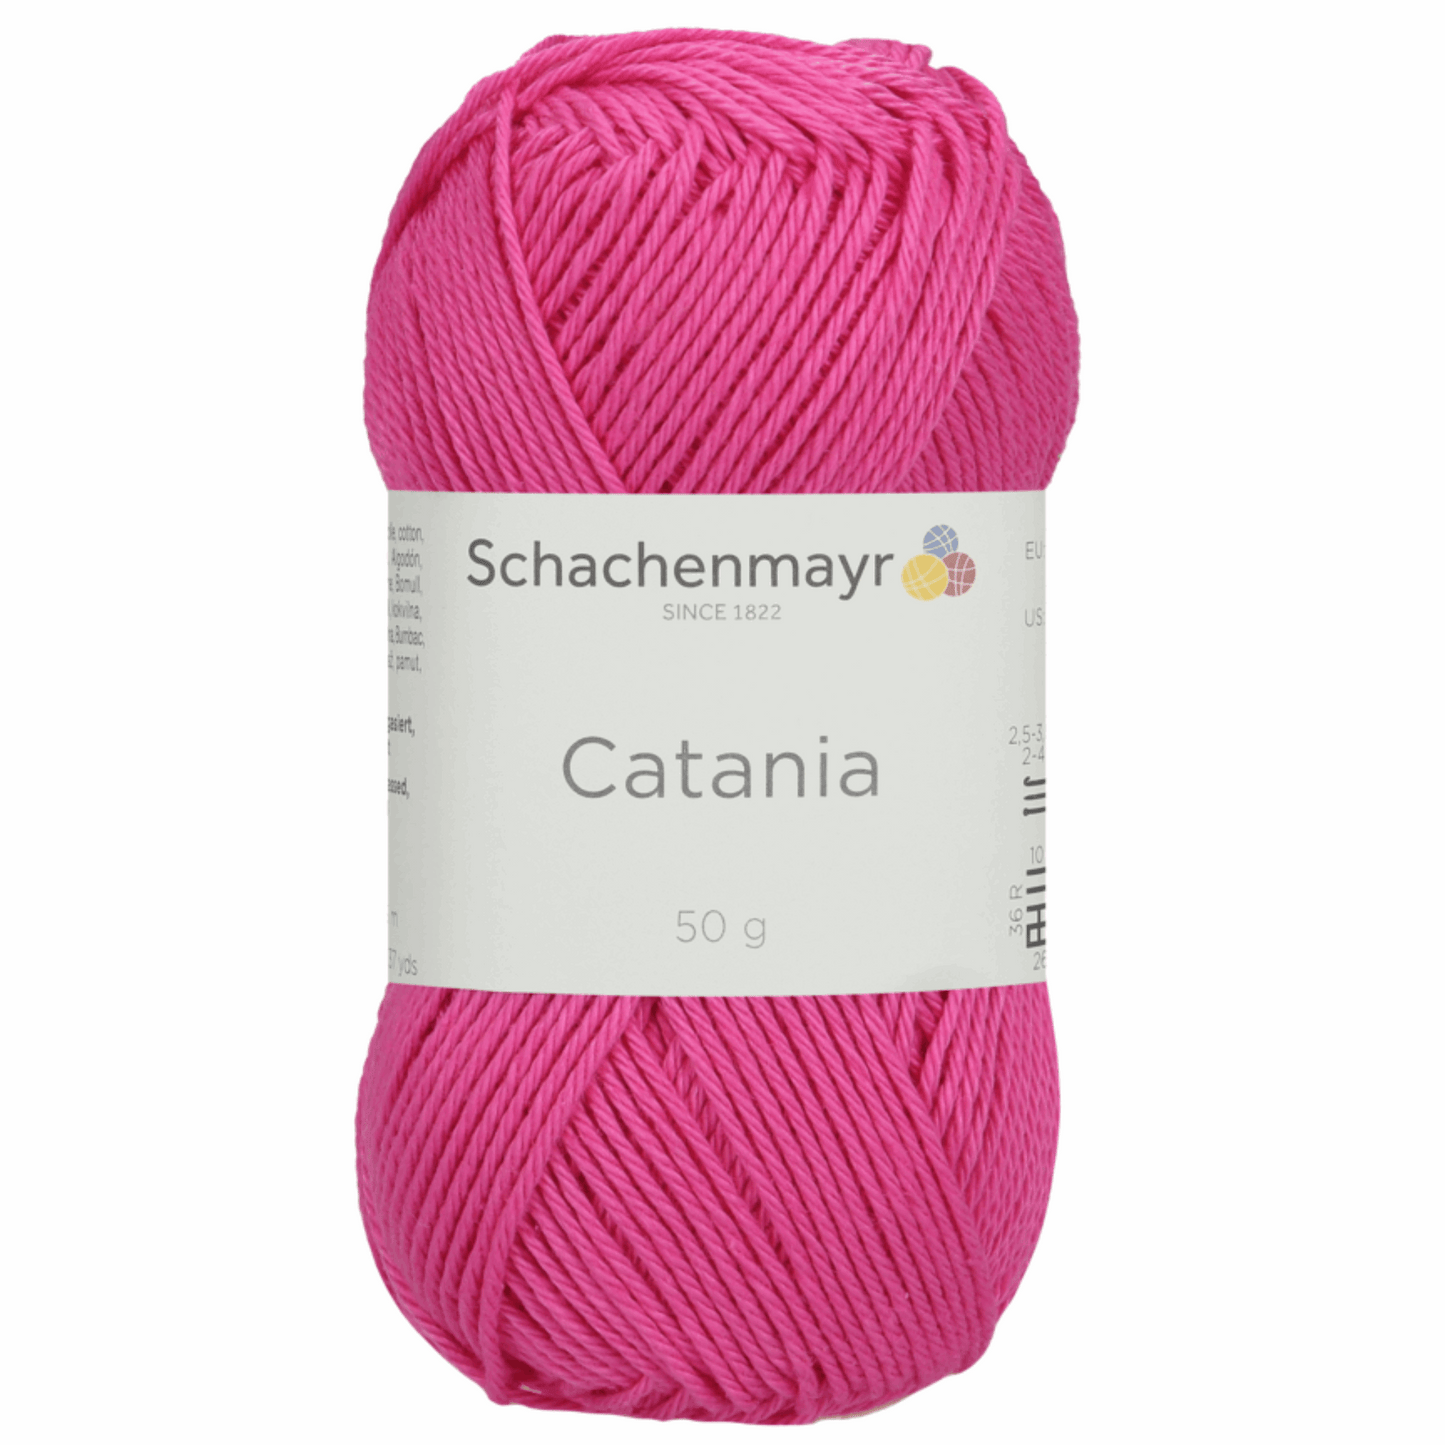 Catania 50g, 90344, Farbe 444, neon pink